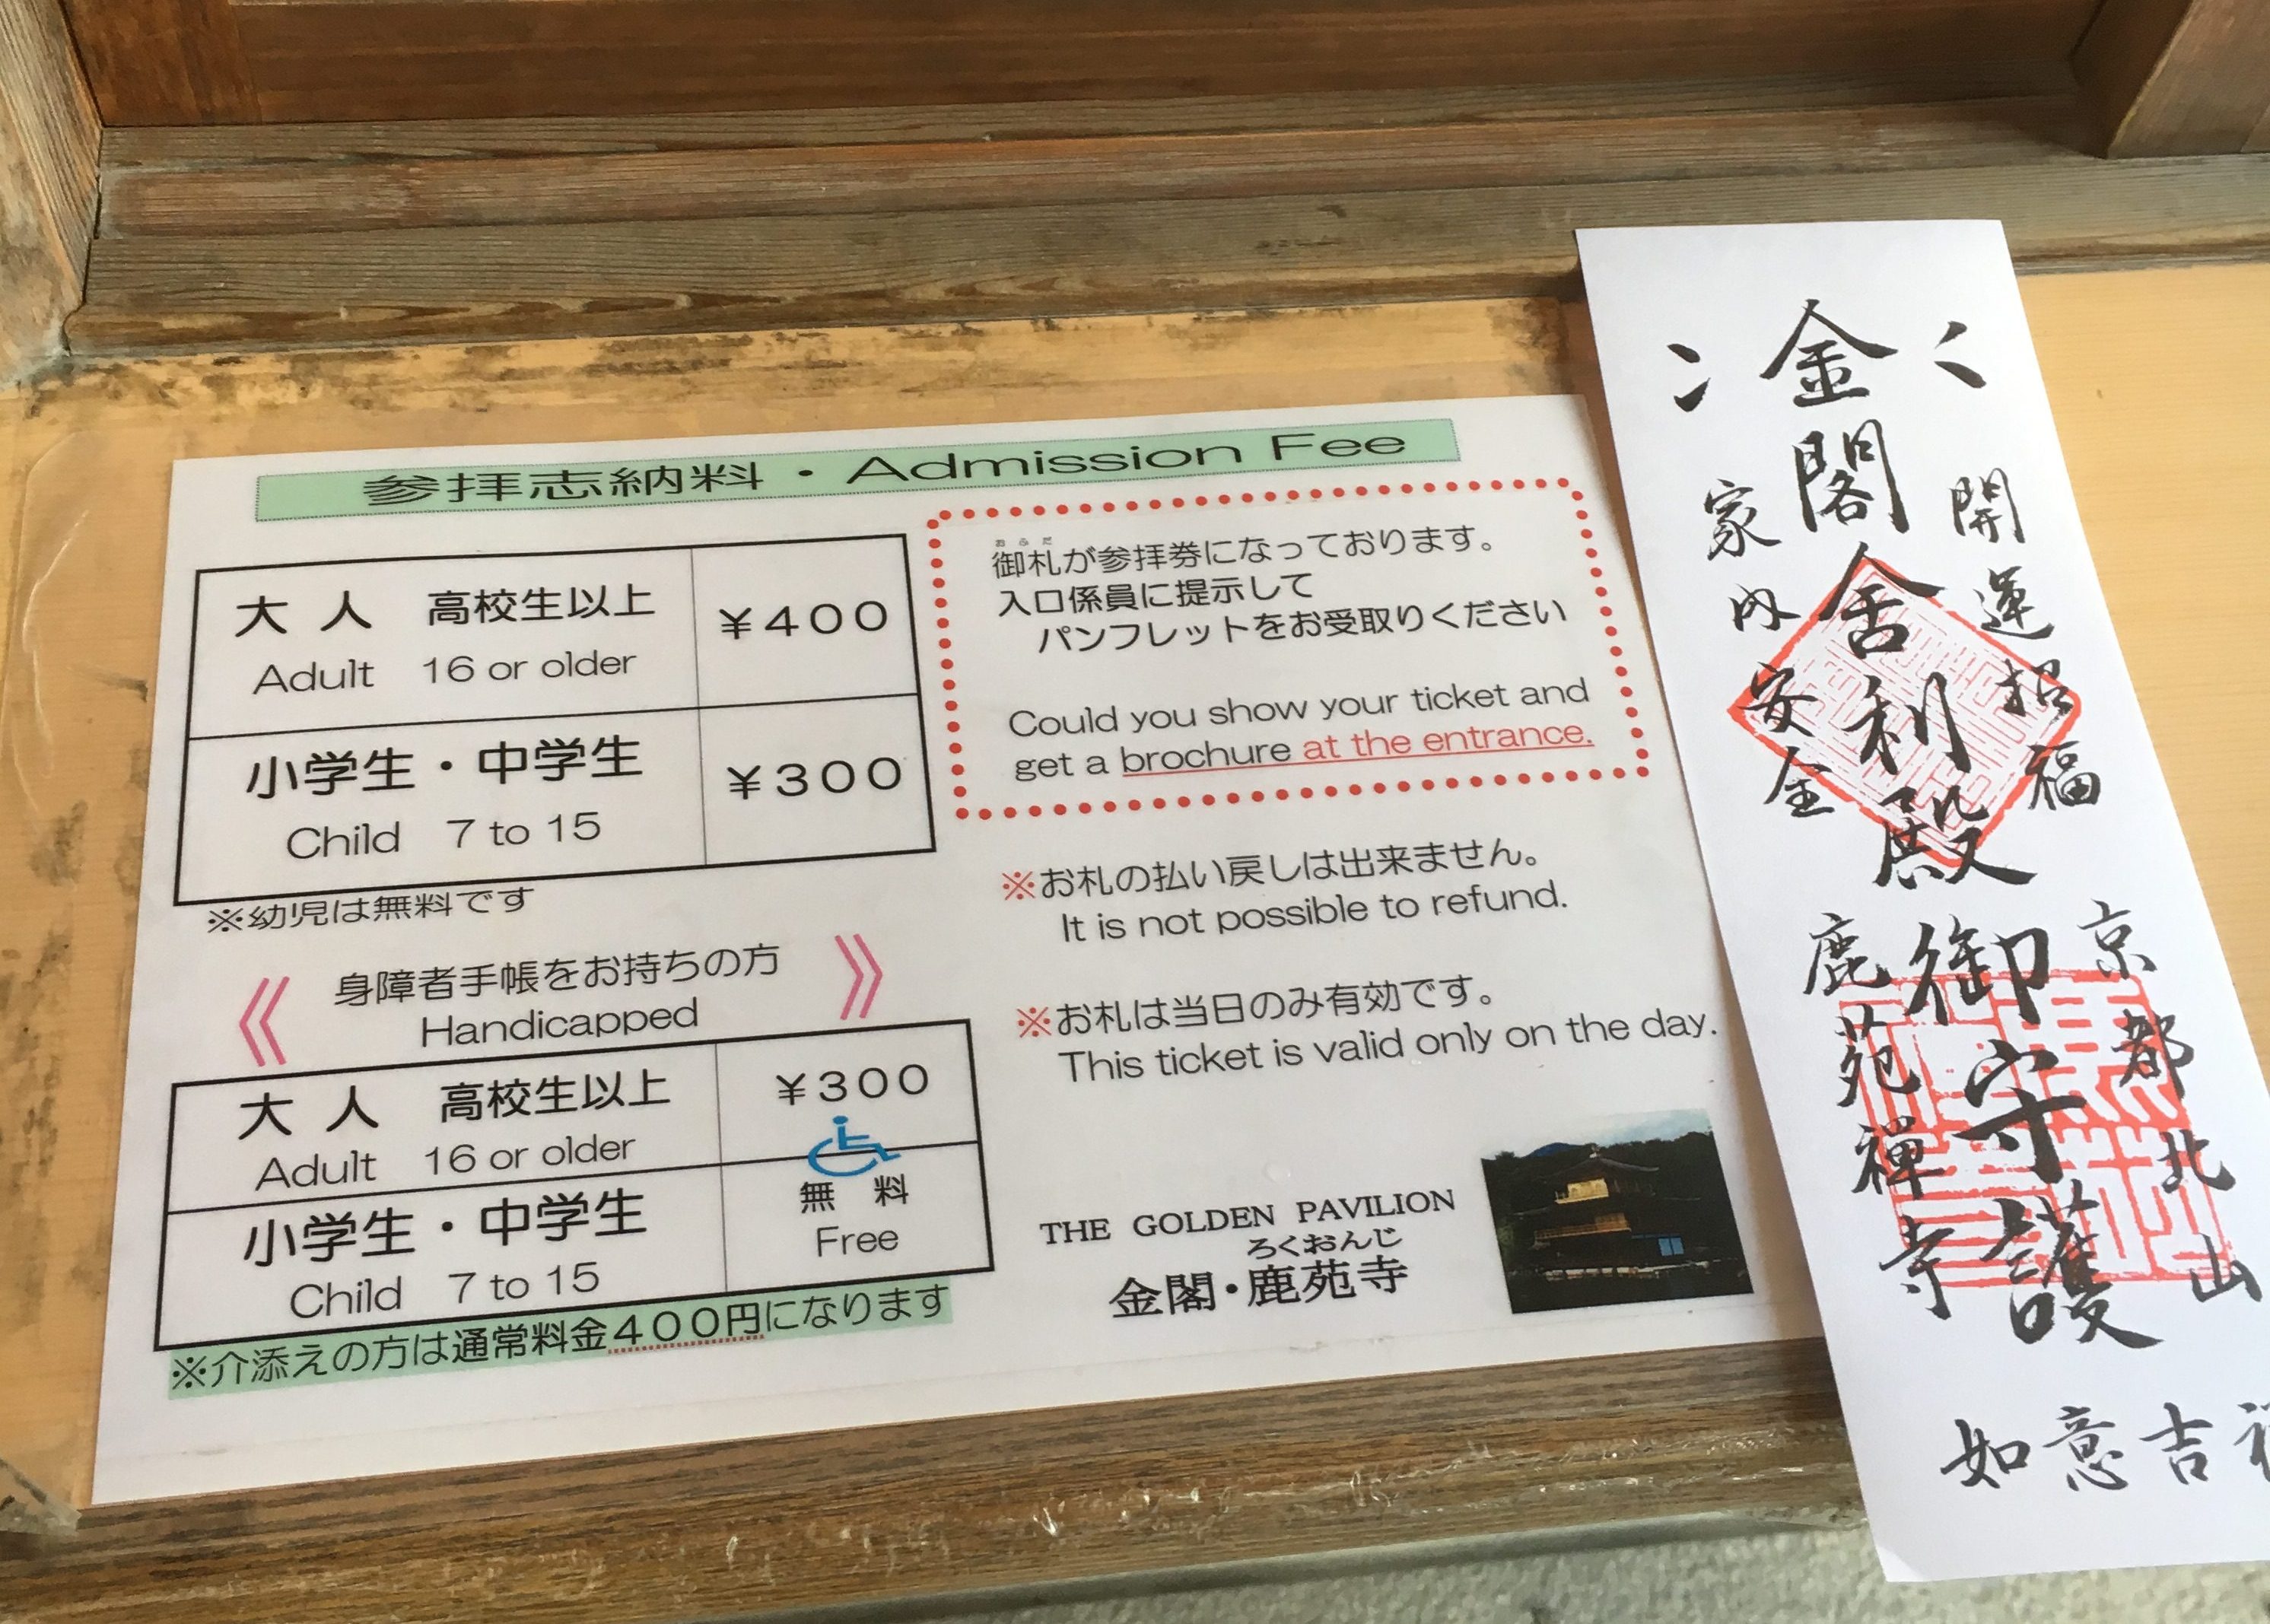 Entrance ticket of the kinkaku-ji